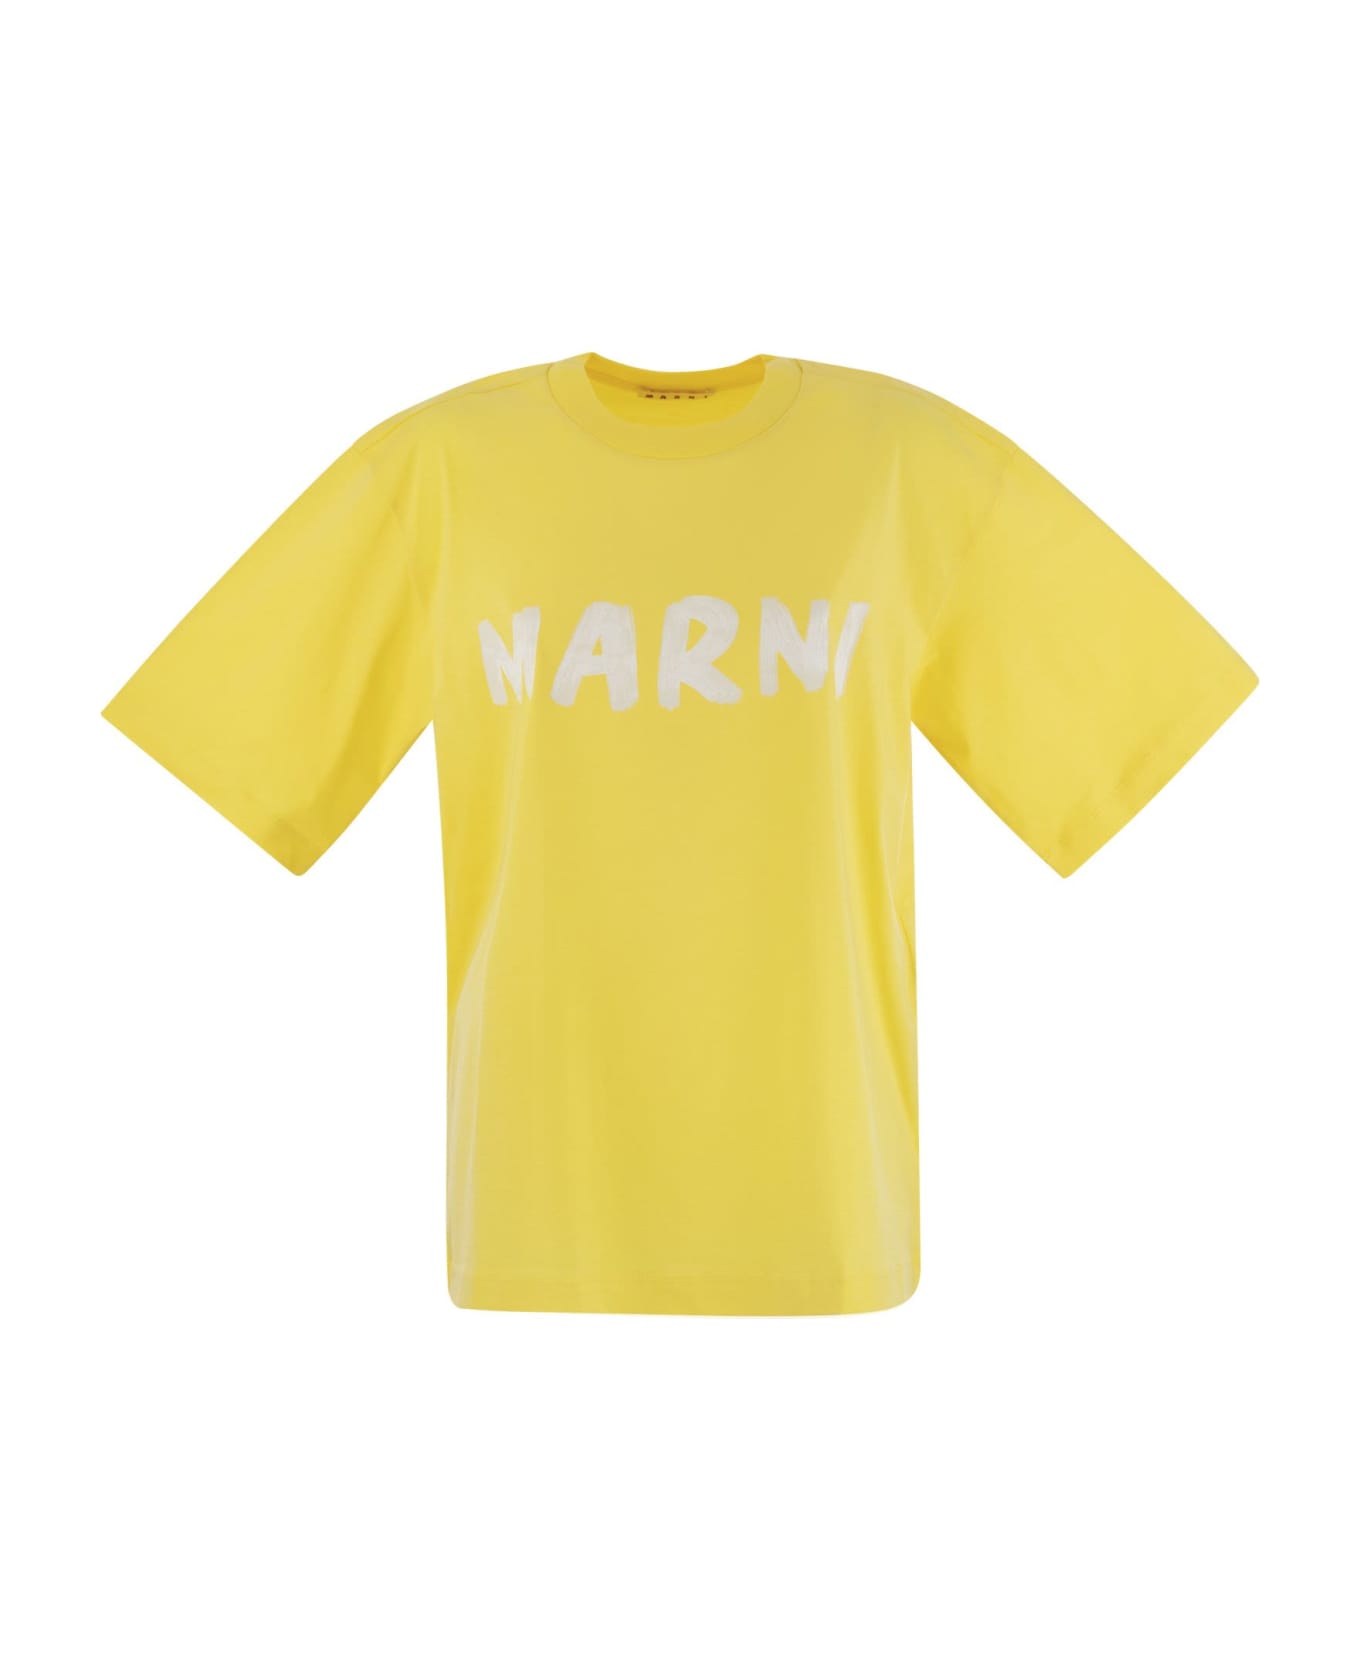 Marni Cotton Jersey T-shirt With Marni Print - Giallo